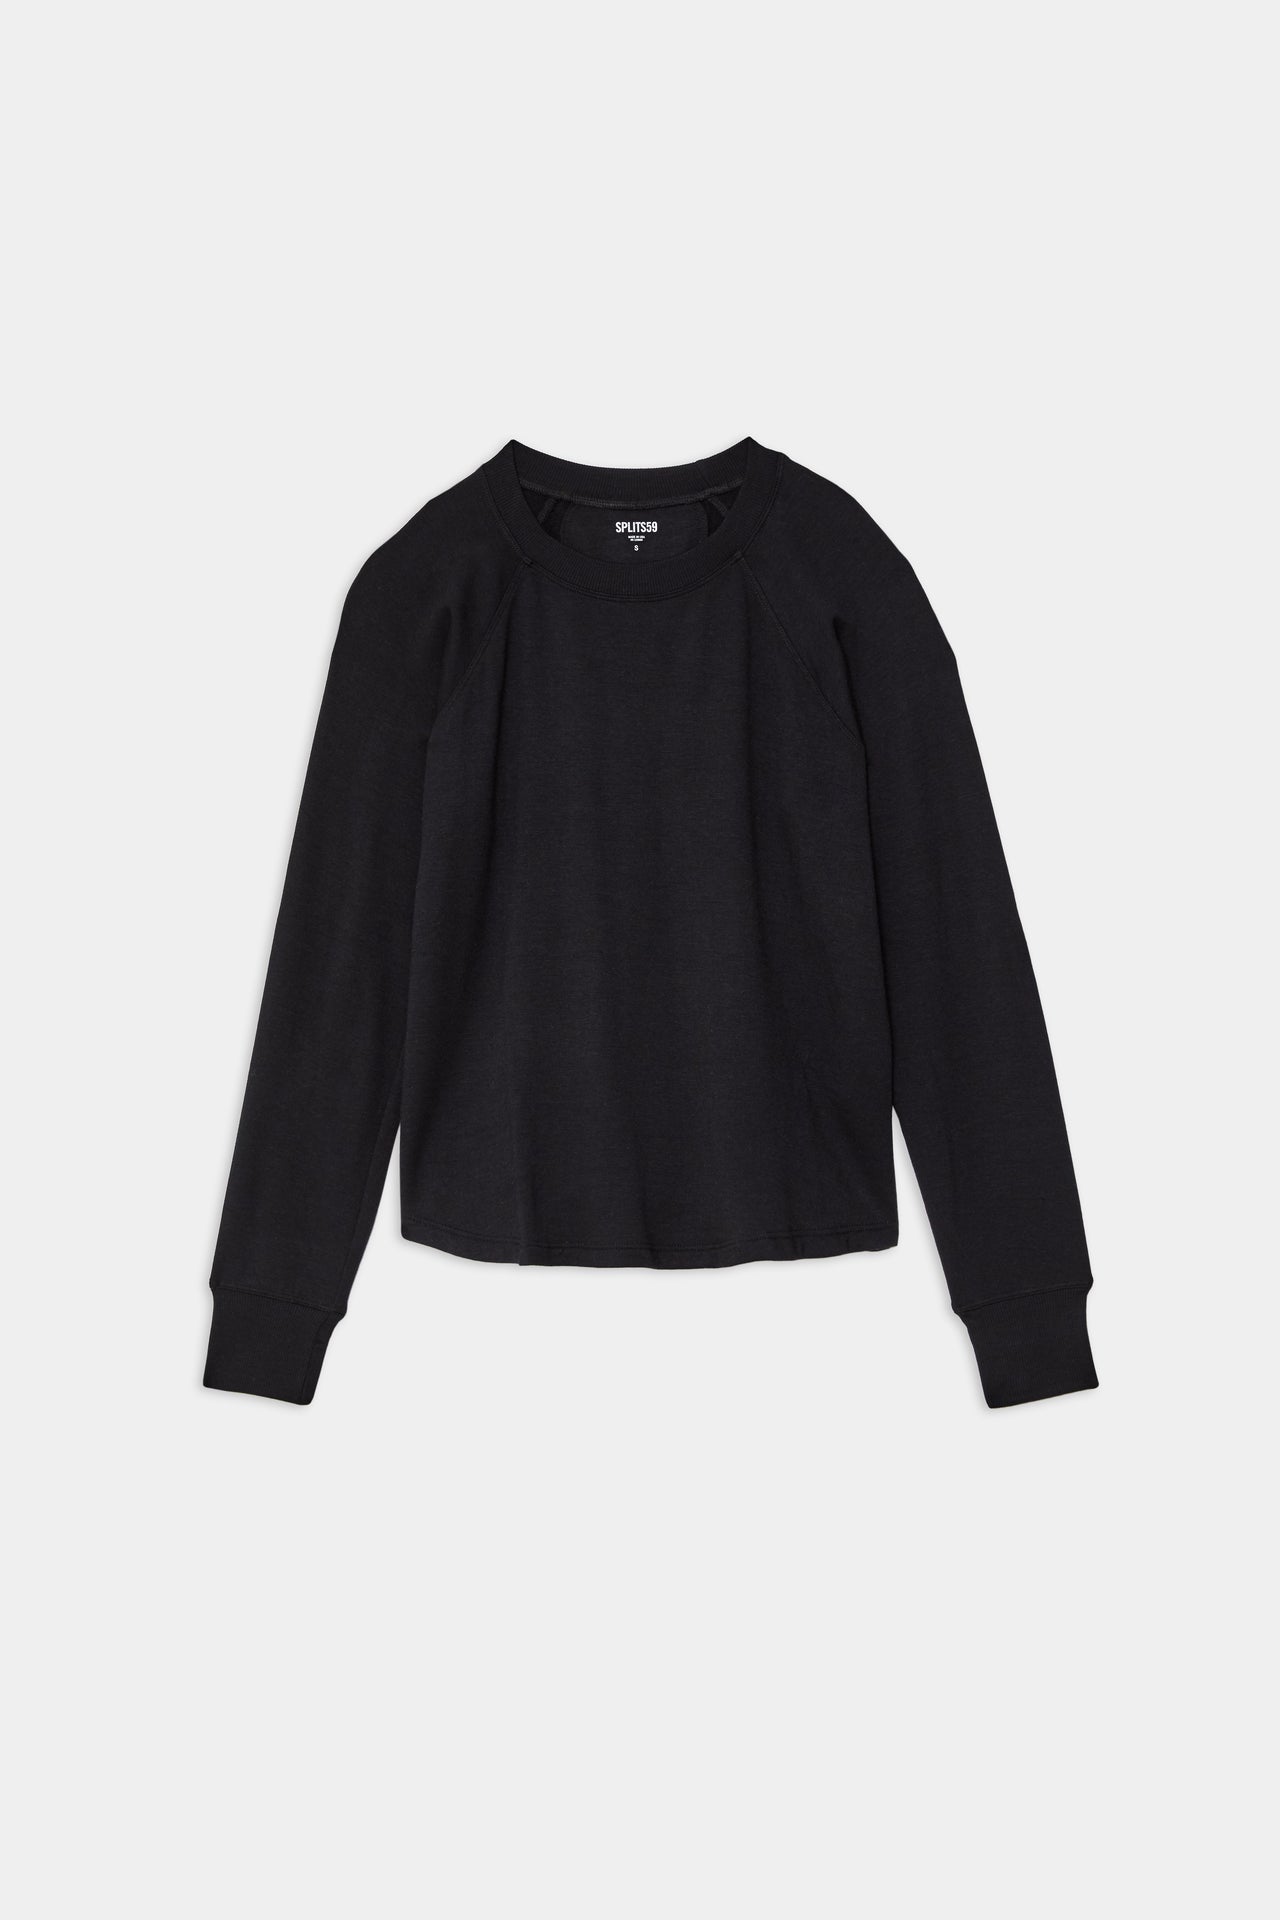 Front flat shot of black sweatshirt